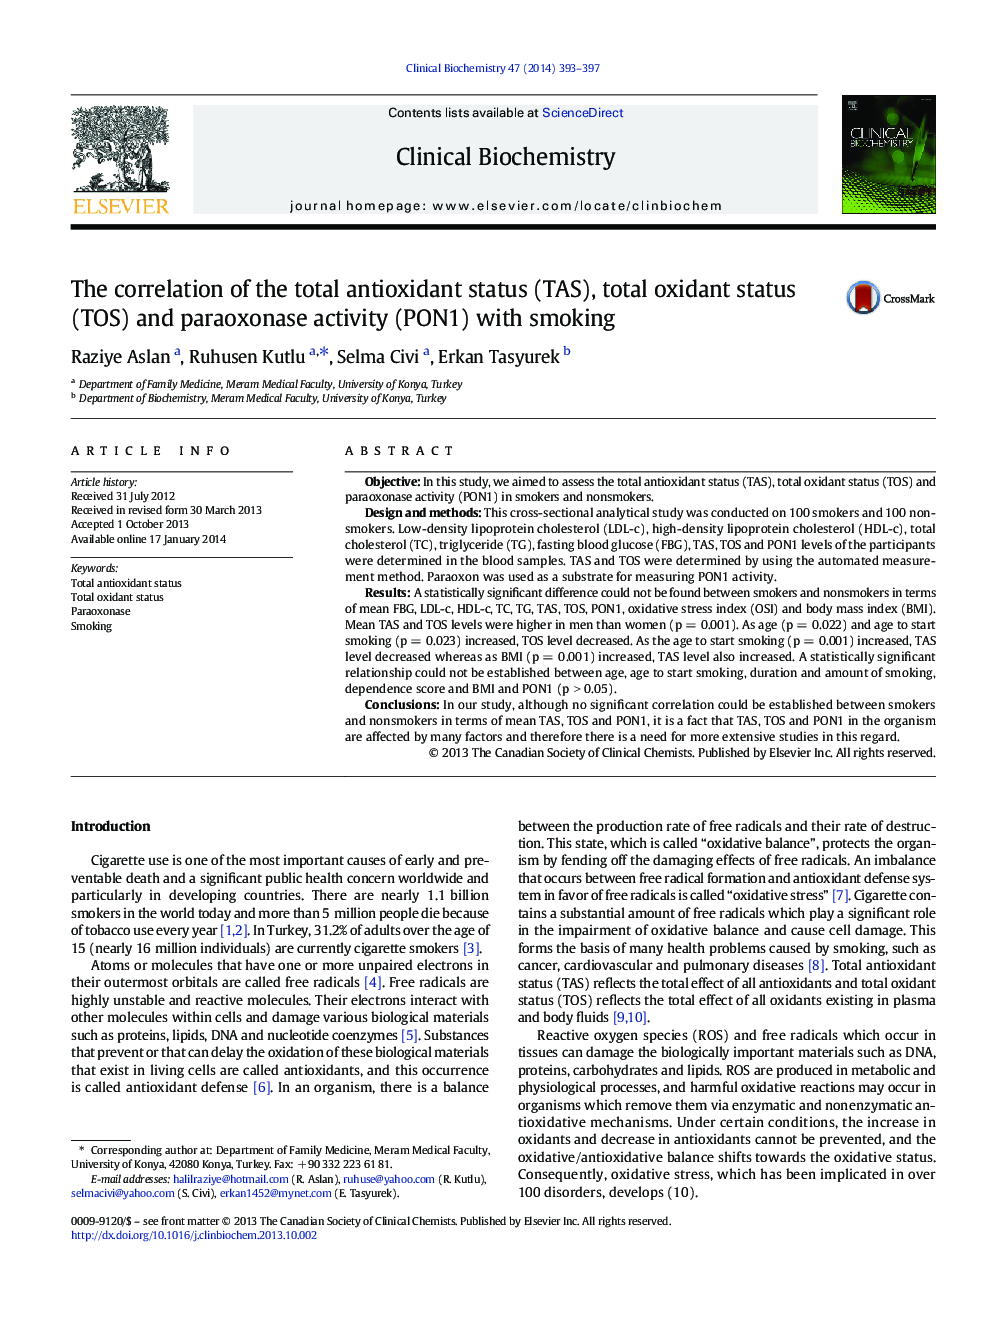 The correlation of the total antioxidant status (TAS), total oxidant status (TOS) and paraoxonase activity (PON1) with smoking